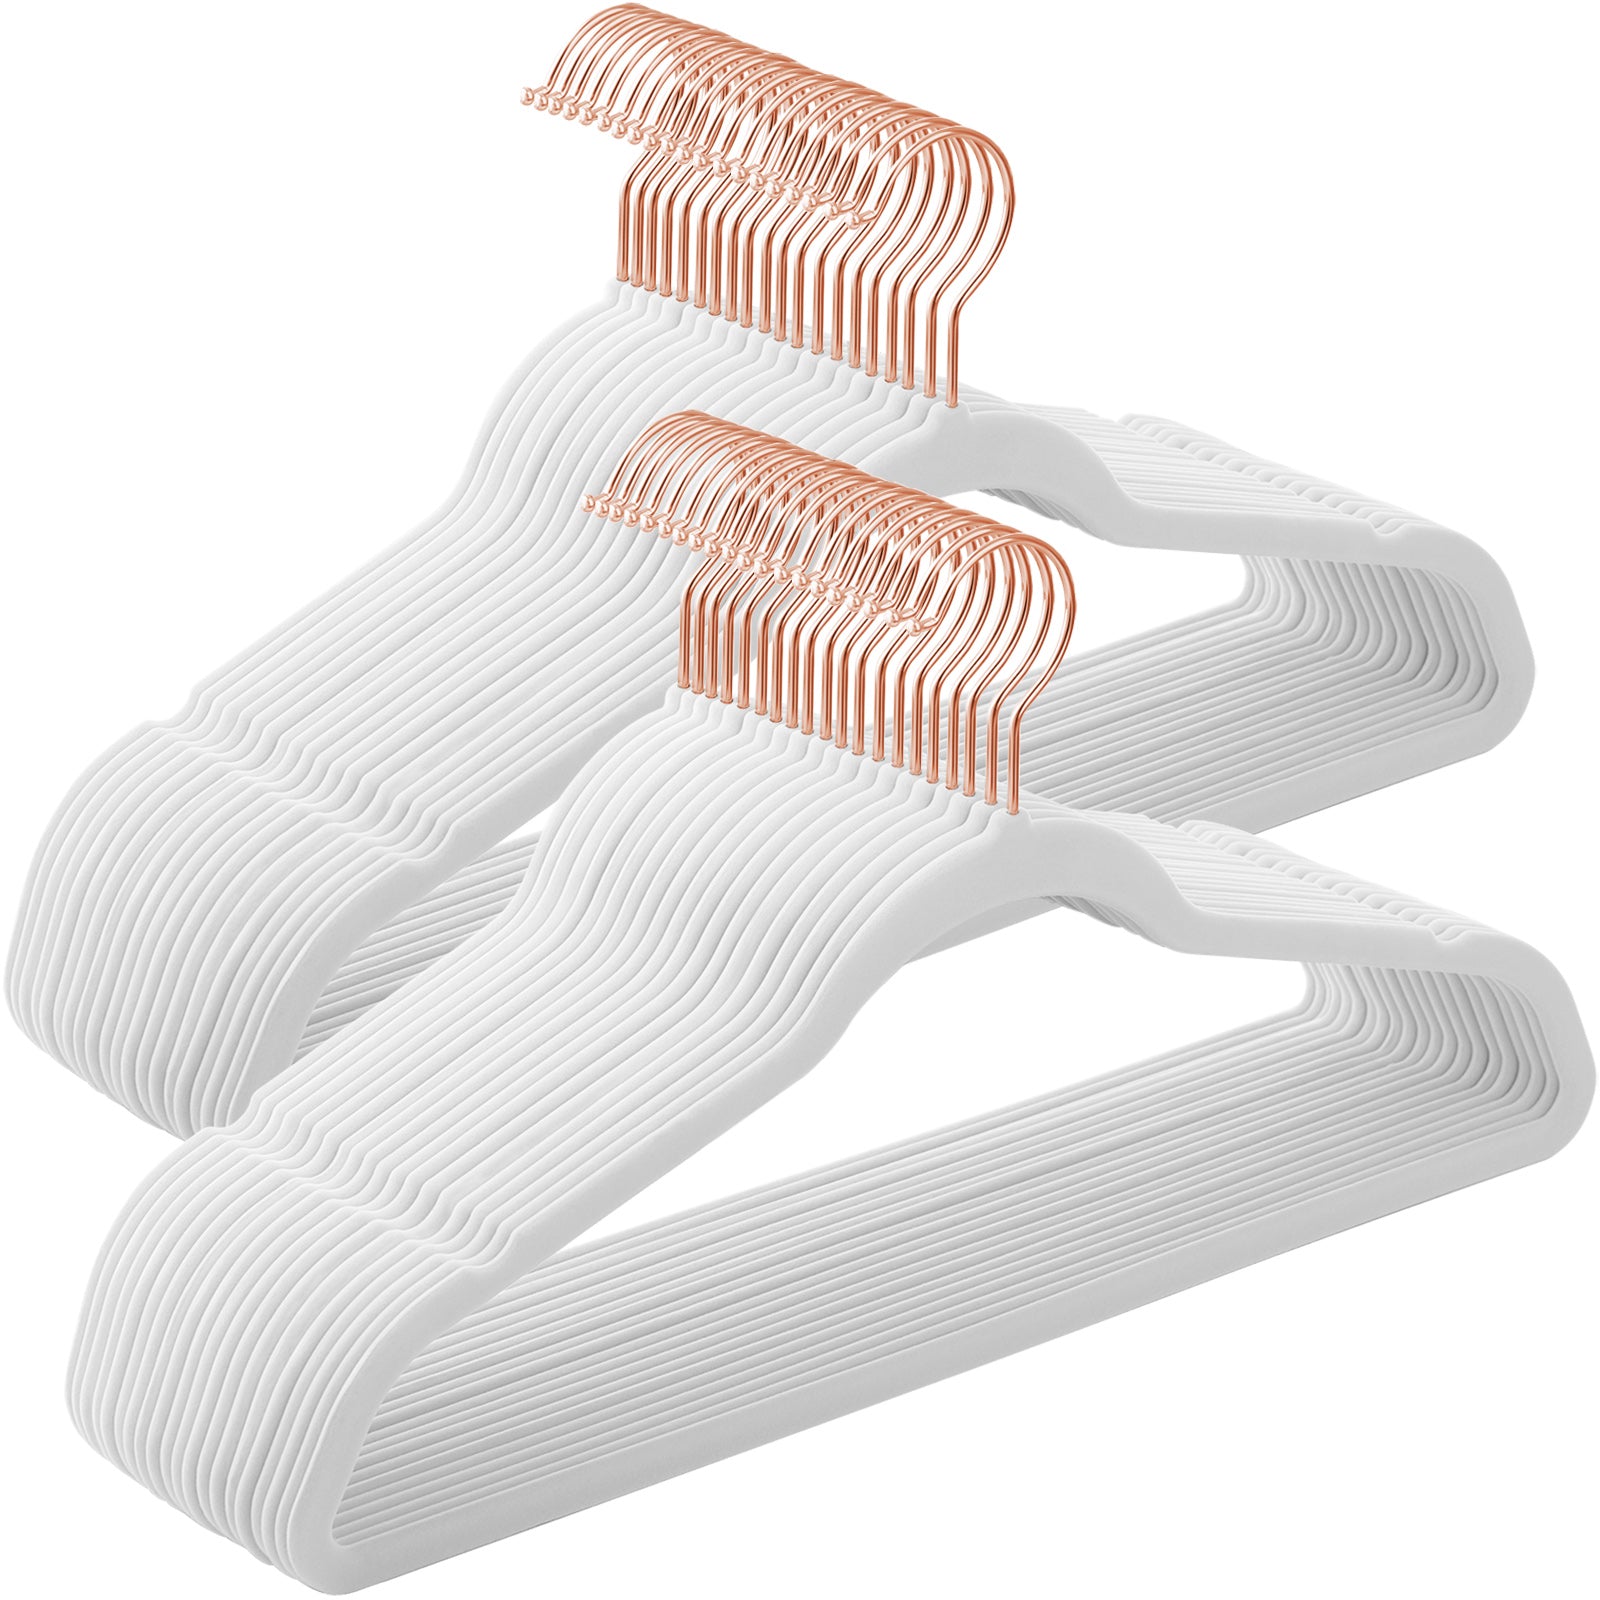 Quality Hangers Clothes Hangers 50 Pack - Non-Velvet Plastic